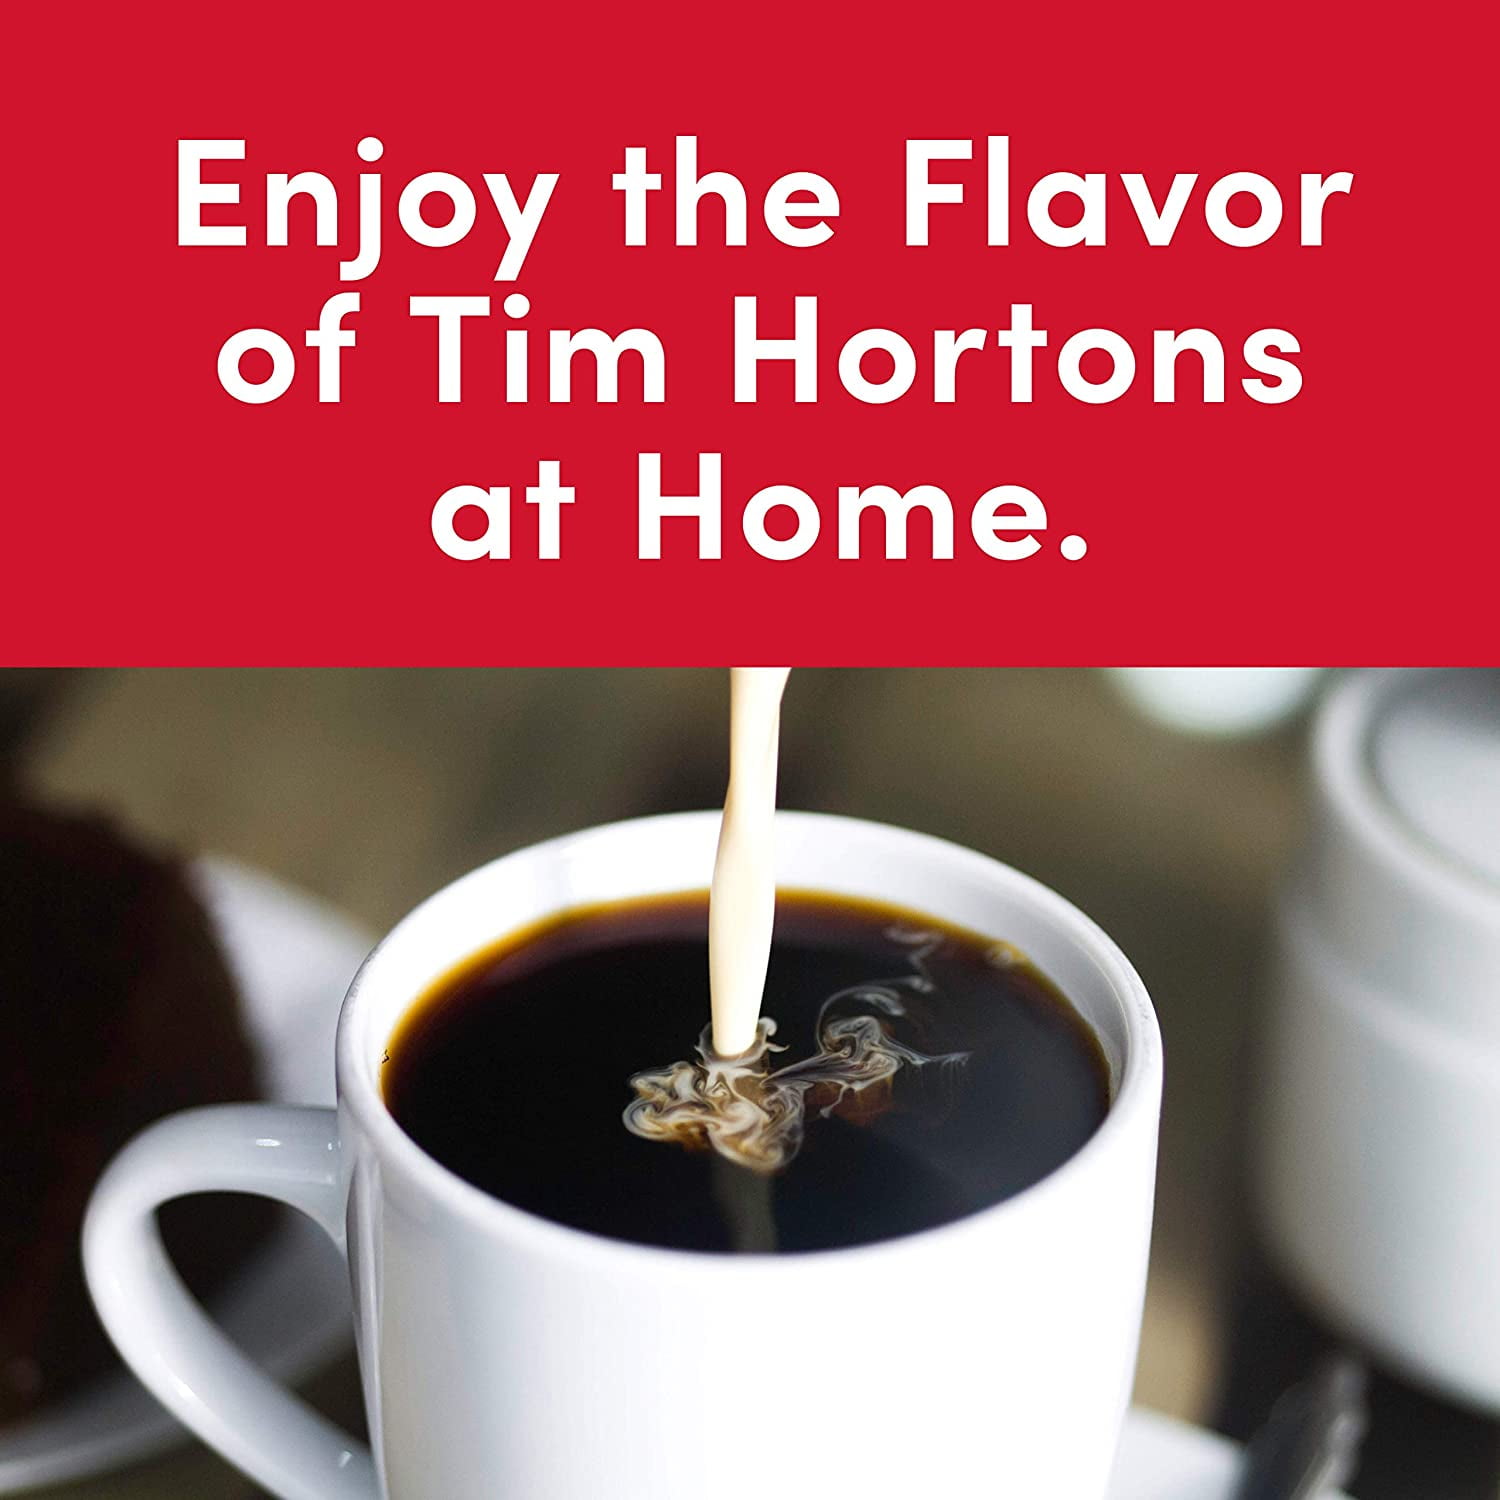 Tim Horton's Single Serve Coffee Cups, Original Blend, 24 Count